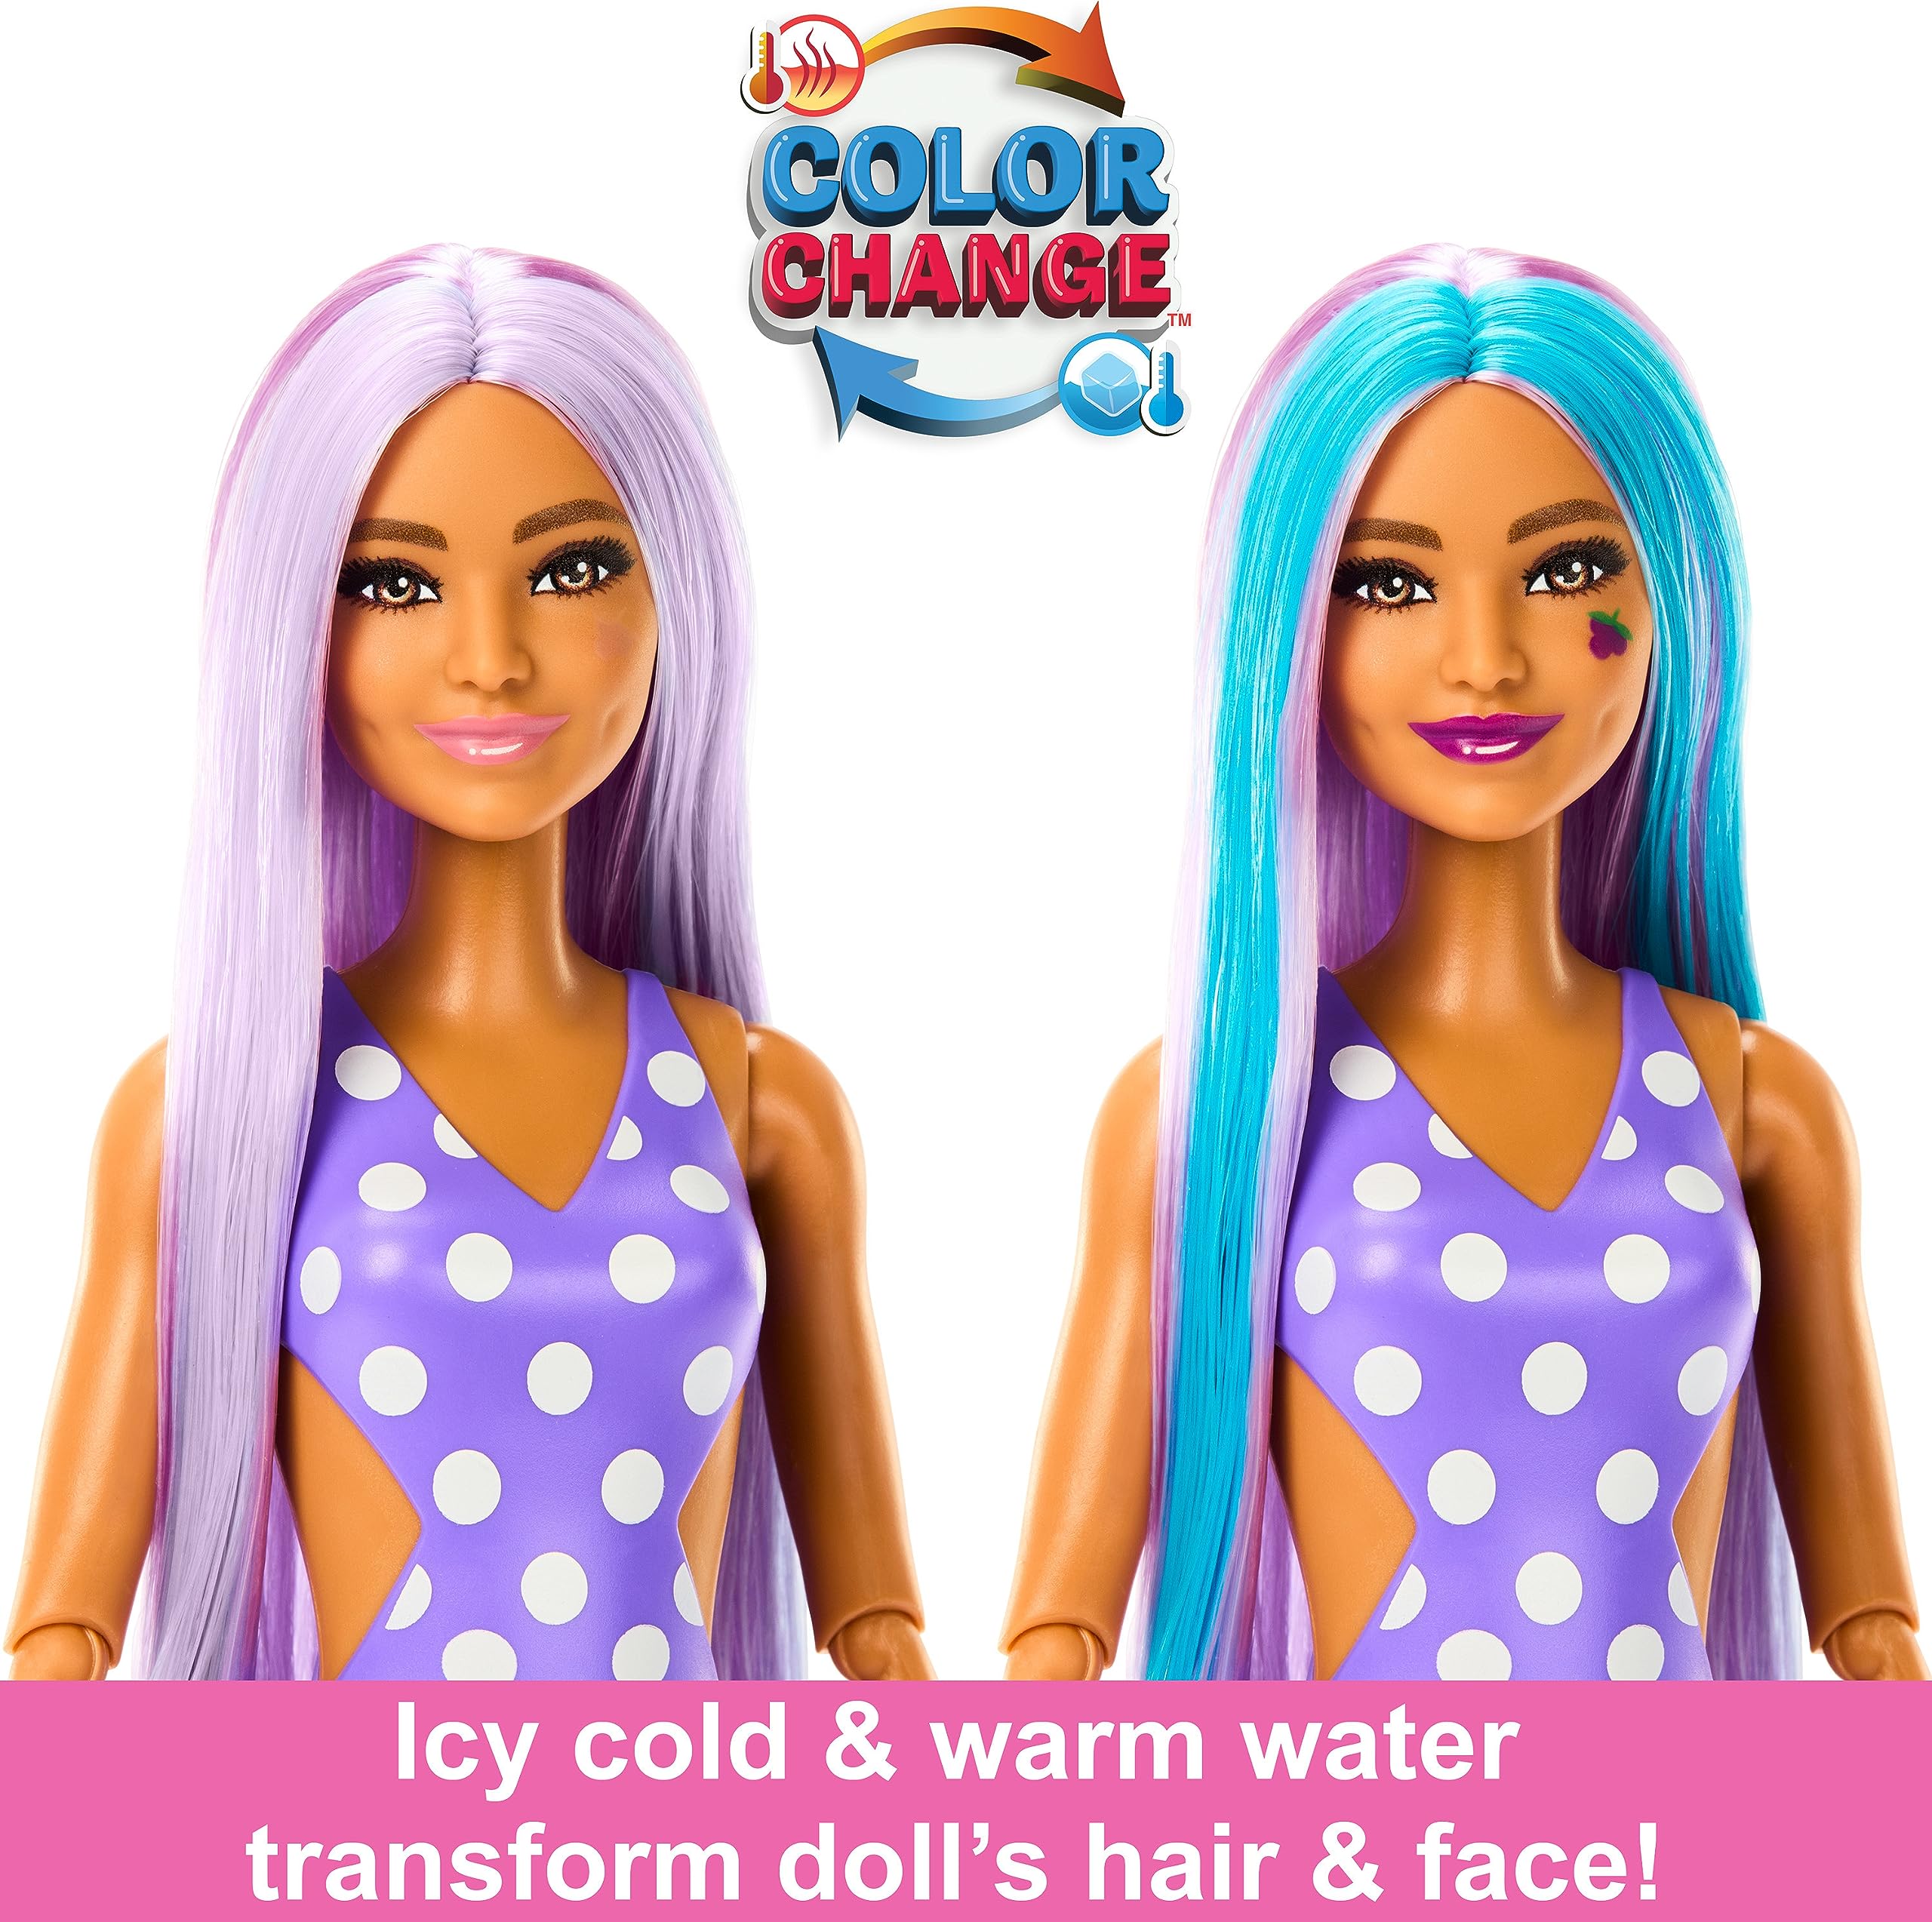 Barbie Pop Reveal Doll & Accessories, Grape Fizz Scent with Purple Hair, 8 Surprises Include Slime, Color Change & Puppy